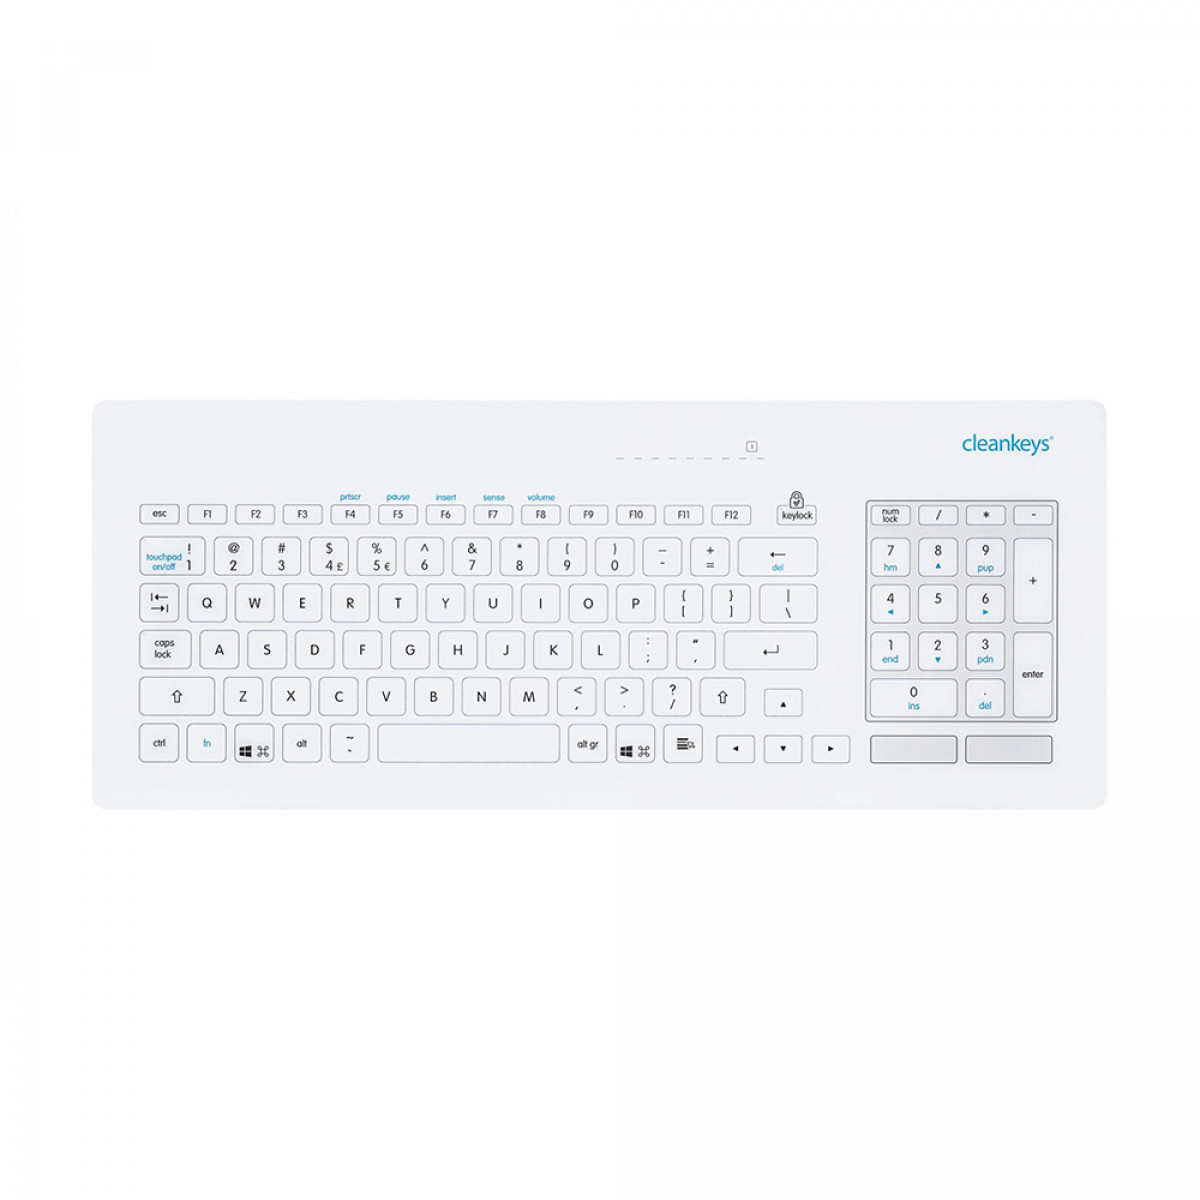 Medical standard hygienic keyboard | GETT CK5 Cleankeys